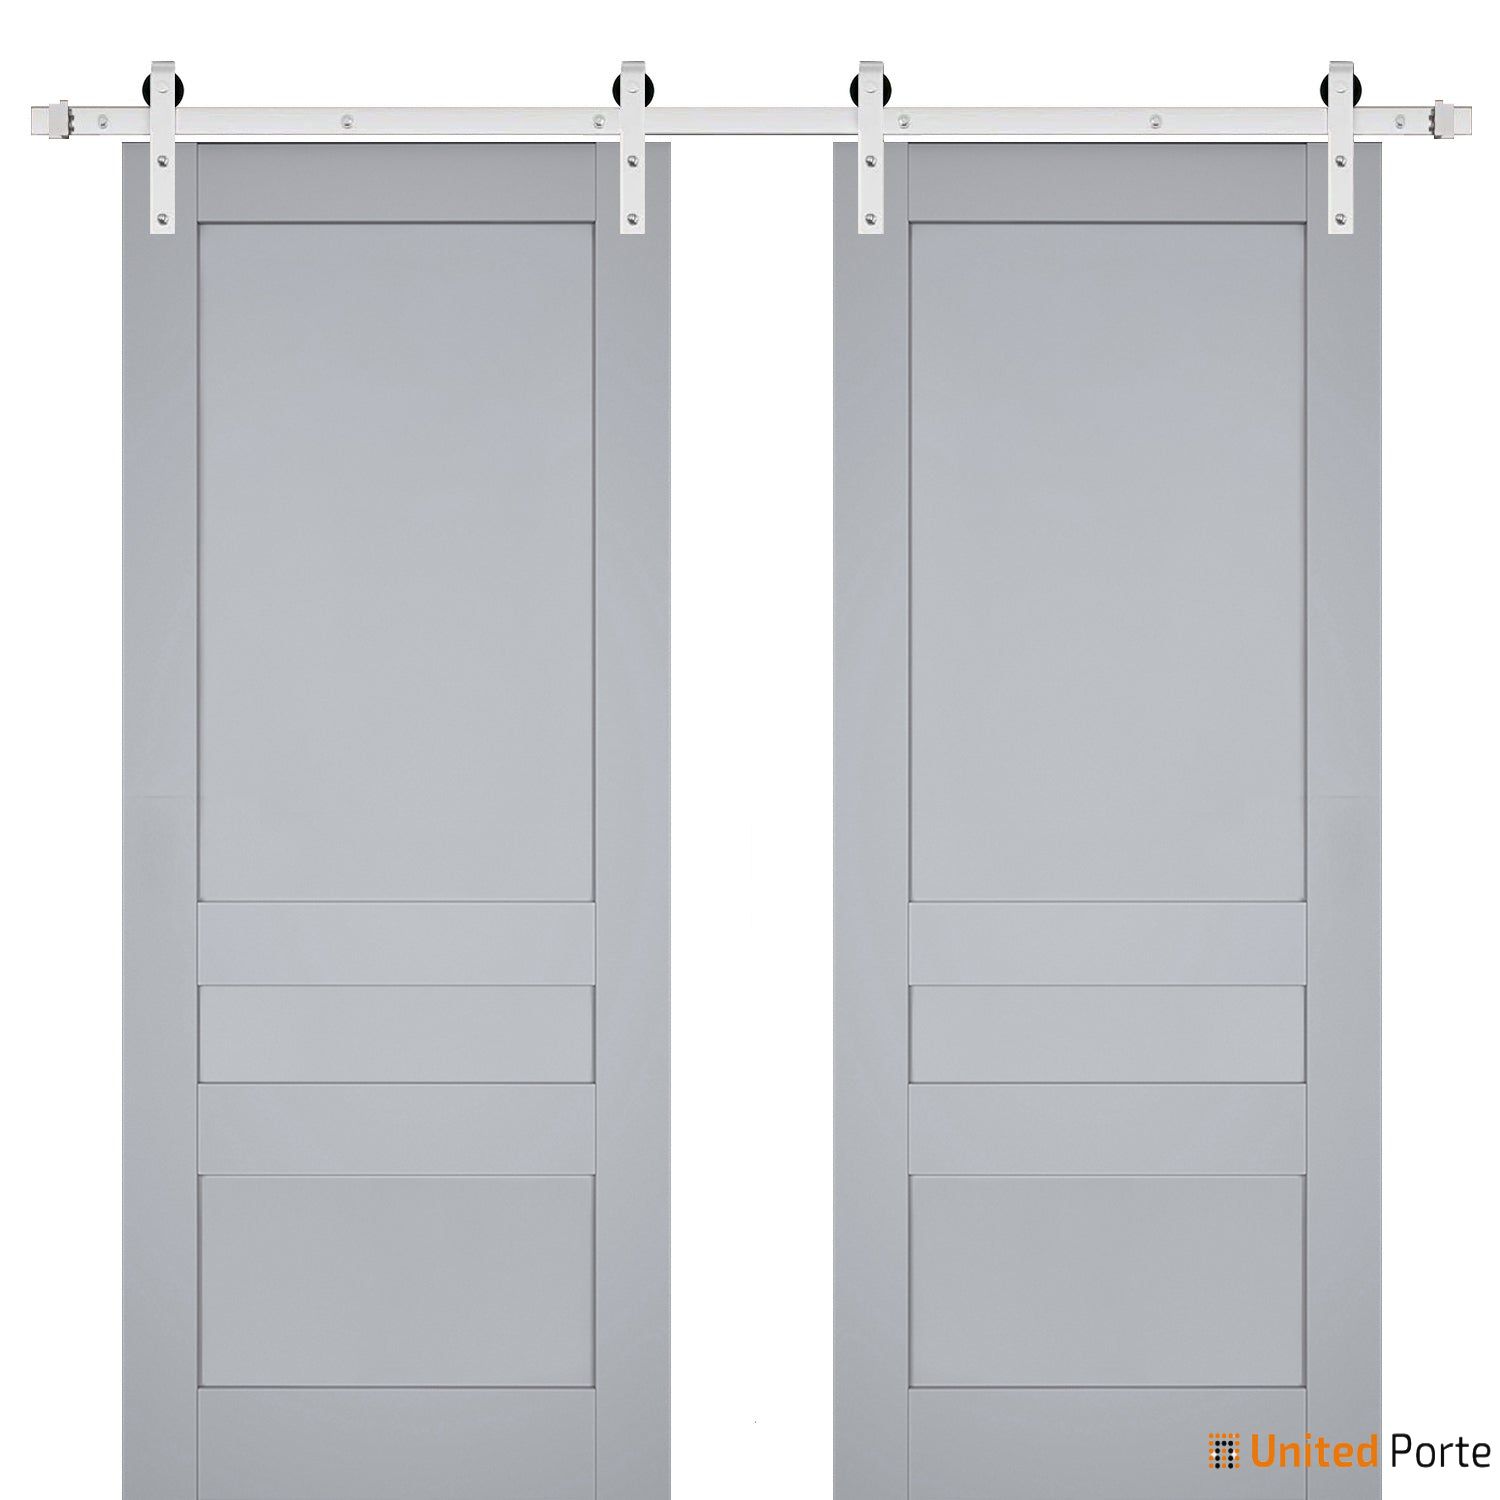 Page Inexpensive barn doors double doors, as well as Inexpensive 8ft doors  United Porte